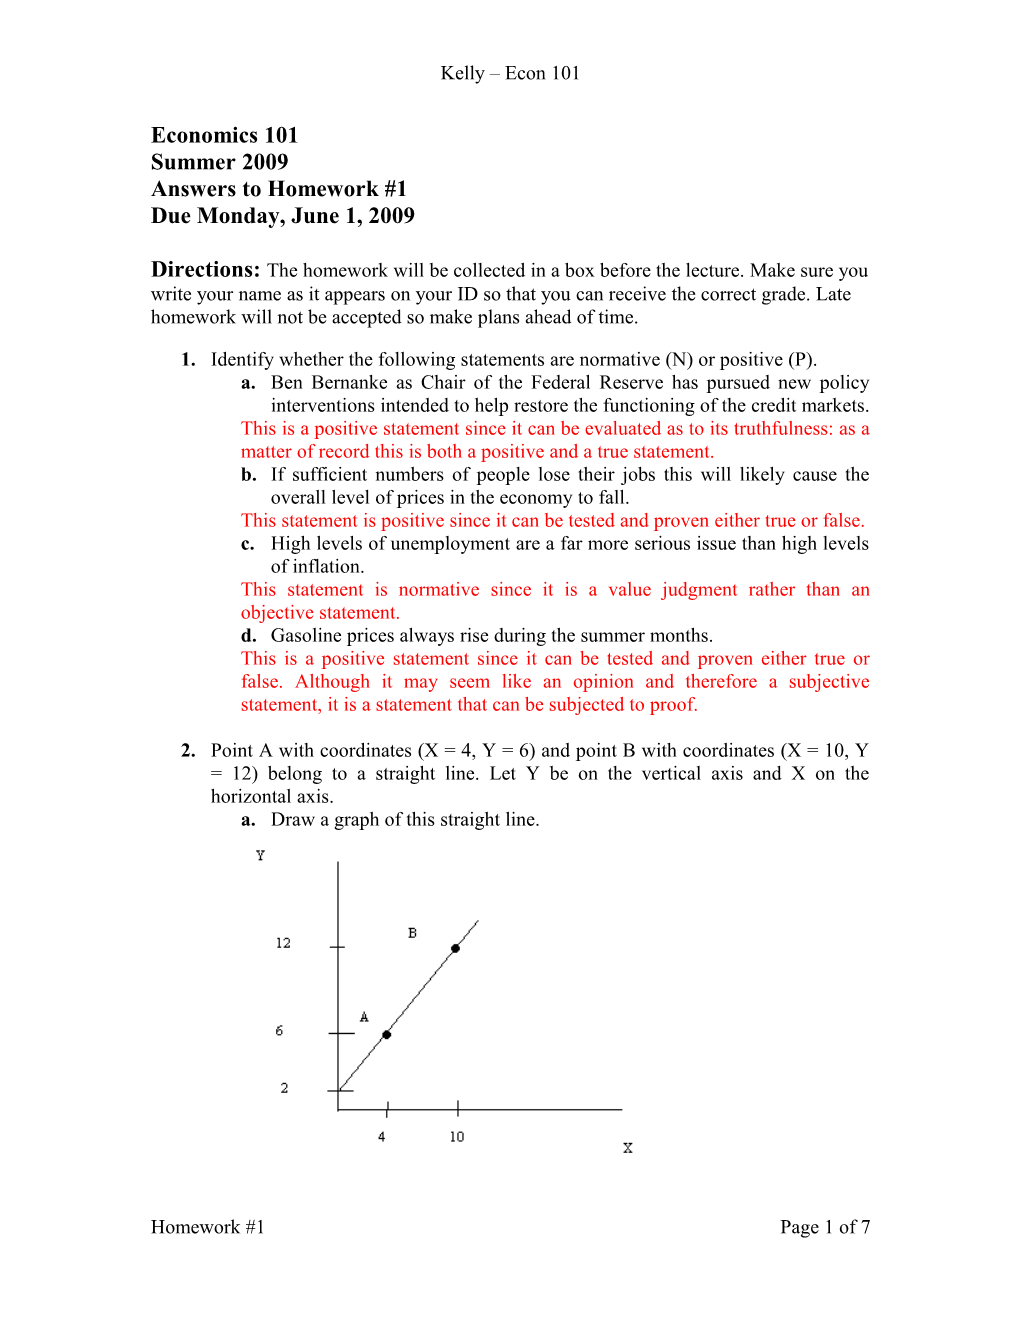 Answers to Homework #1